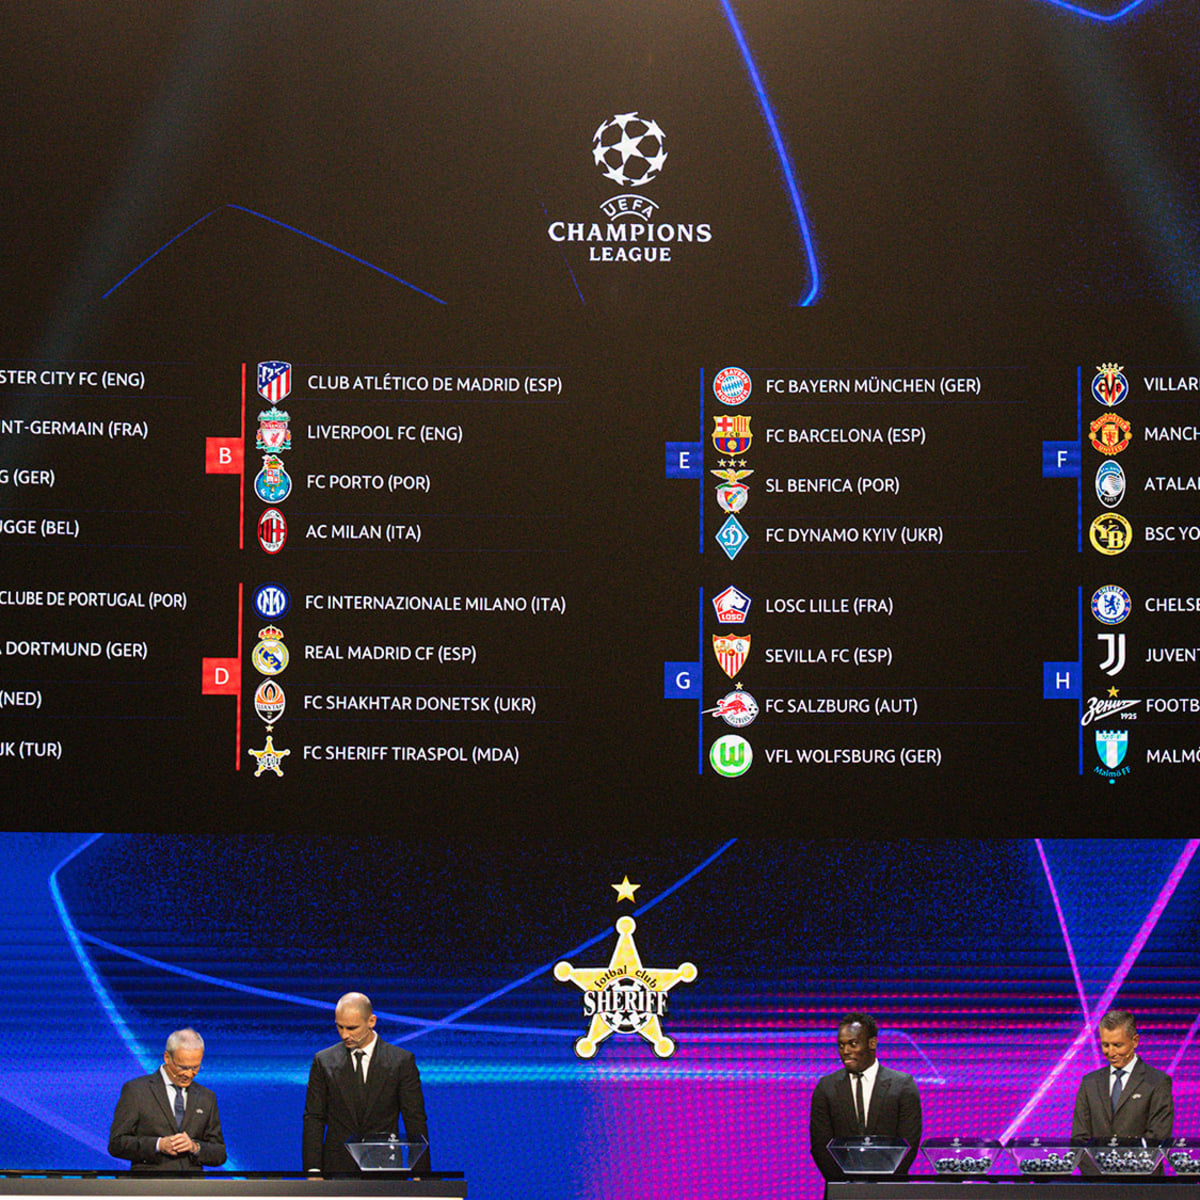 Champions League 2021/22: Draw, pot seedings & match dates